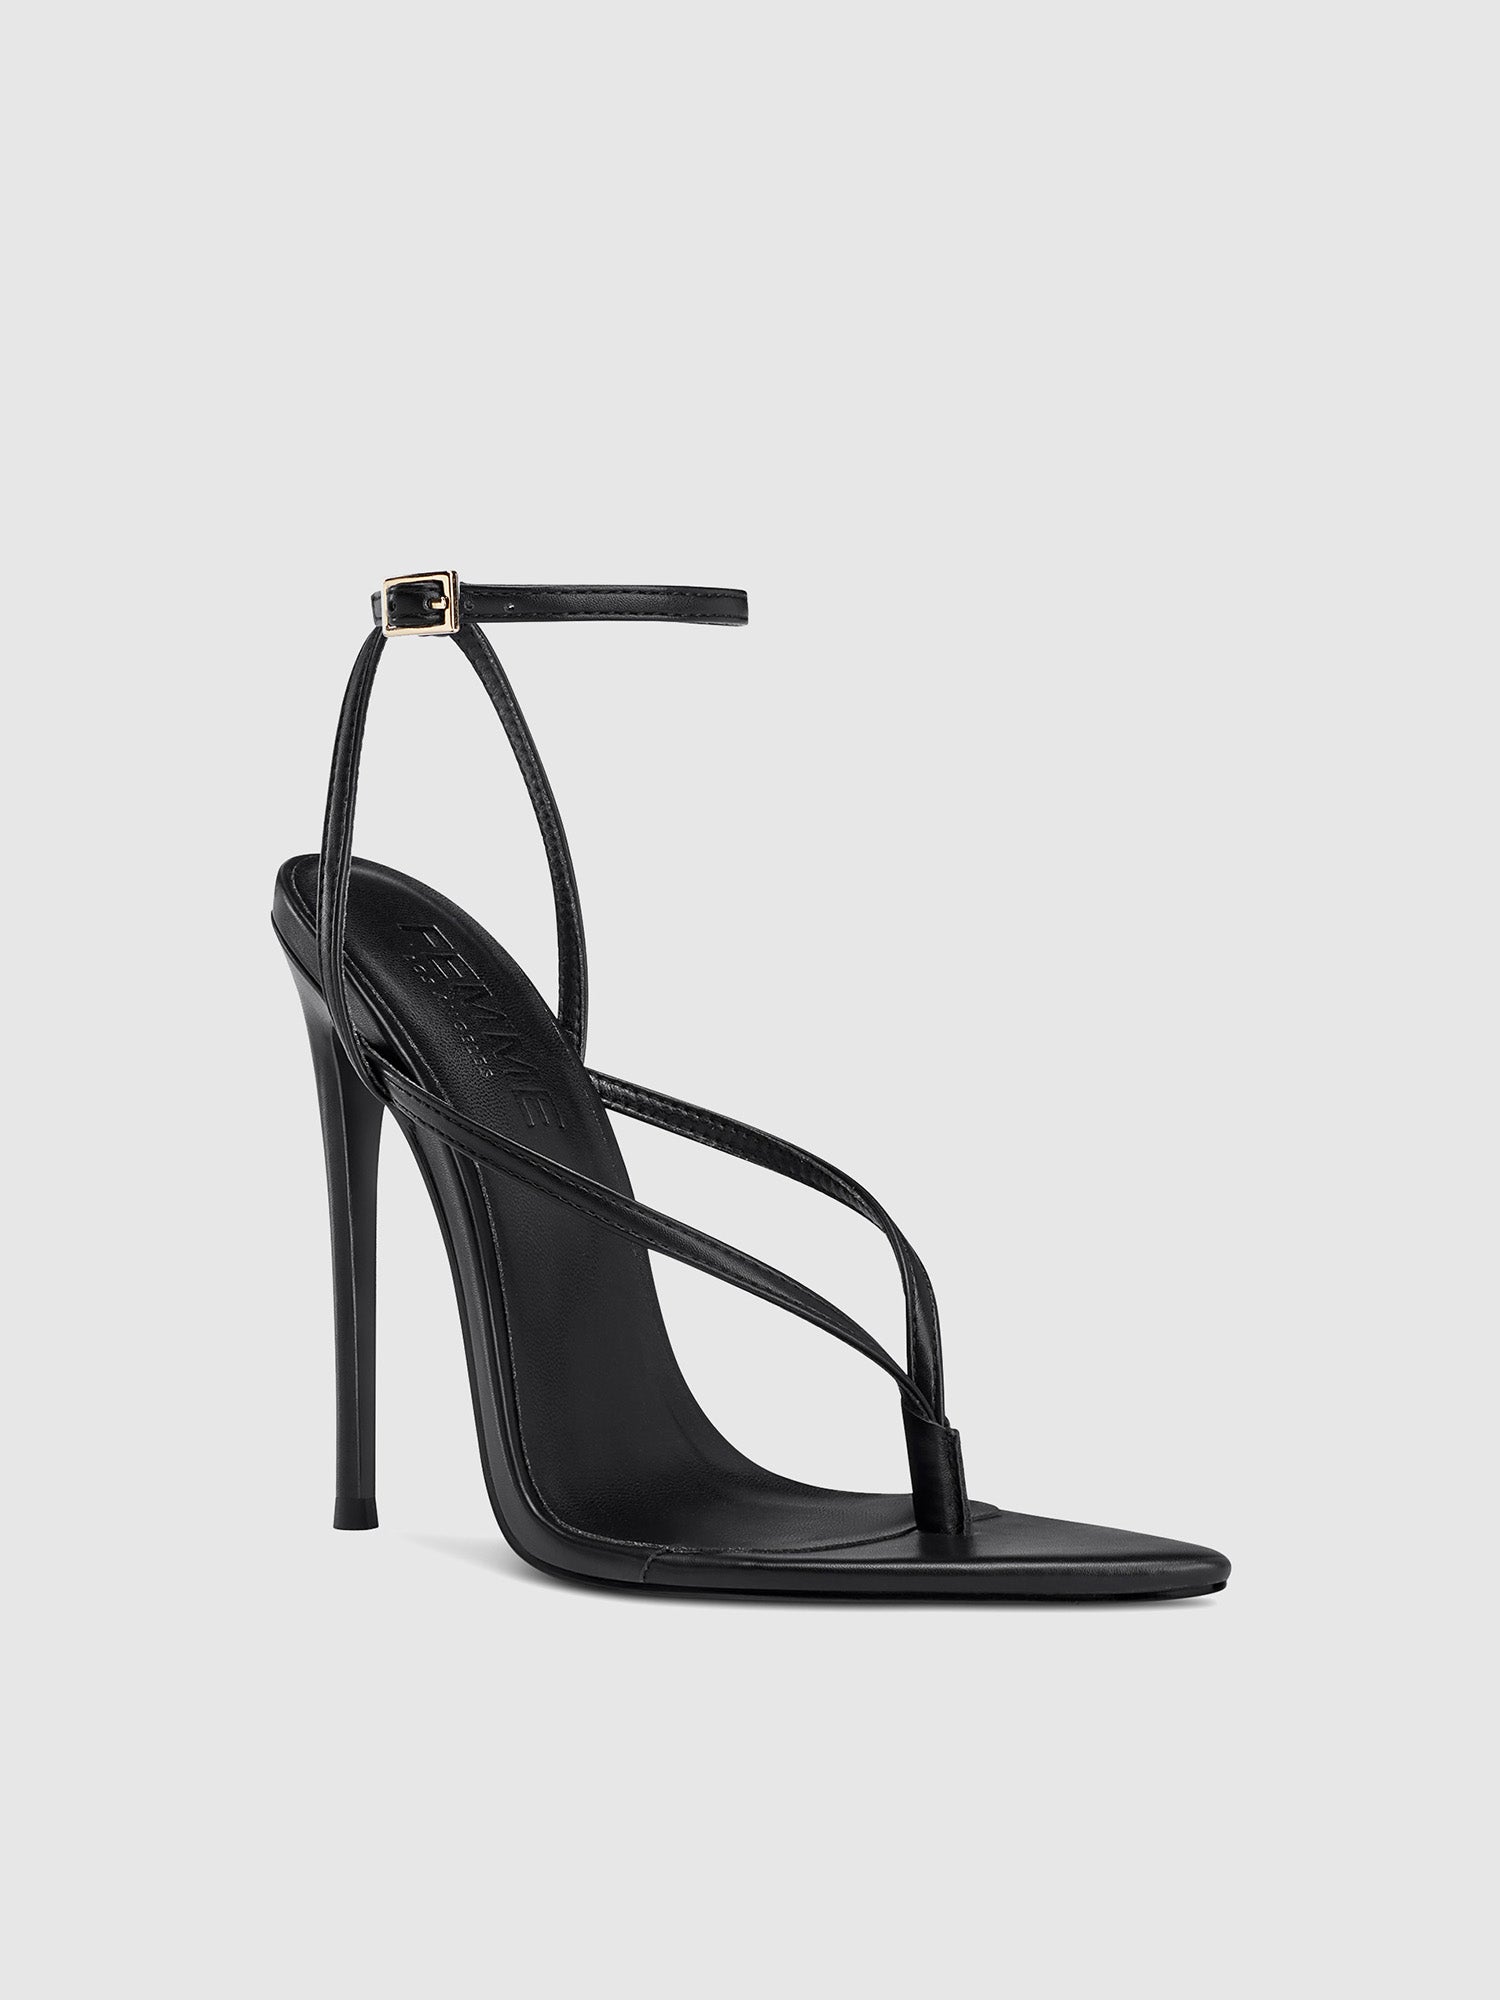 Candies Shoes Womens 10 High Heels Pump Platform Slip On Black Fabric Peep  Toe | eBay